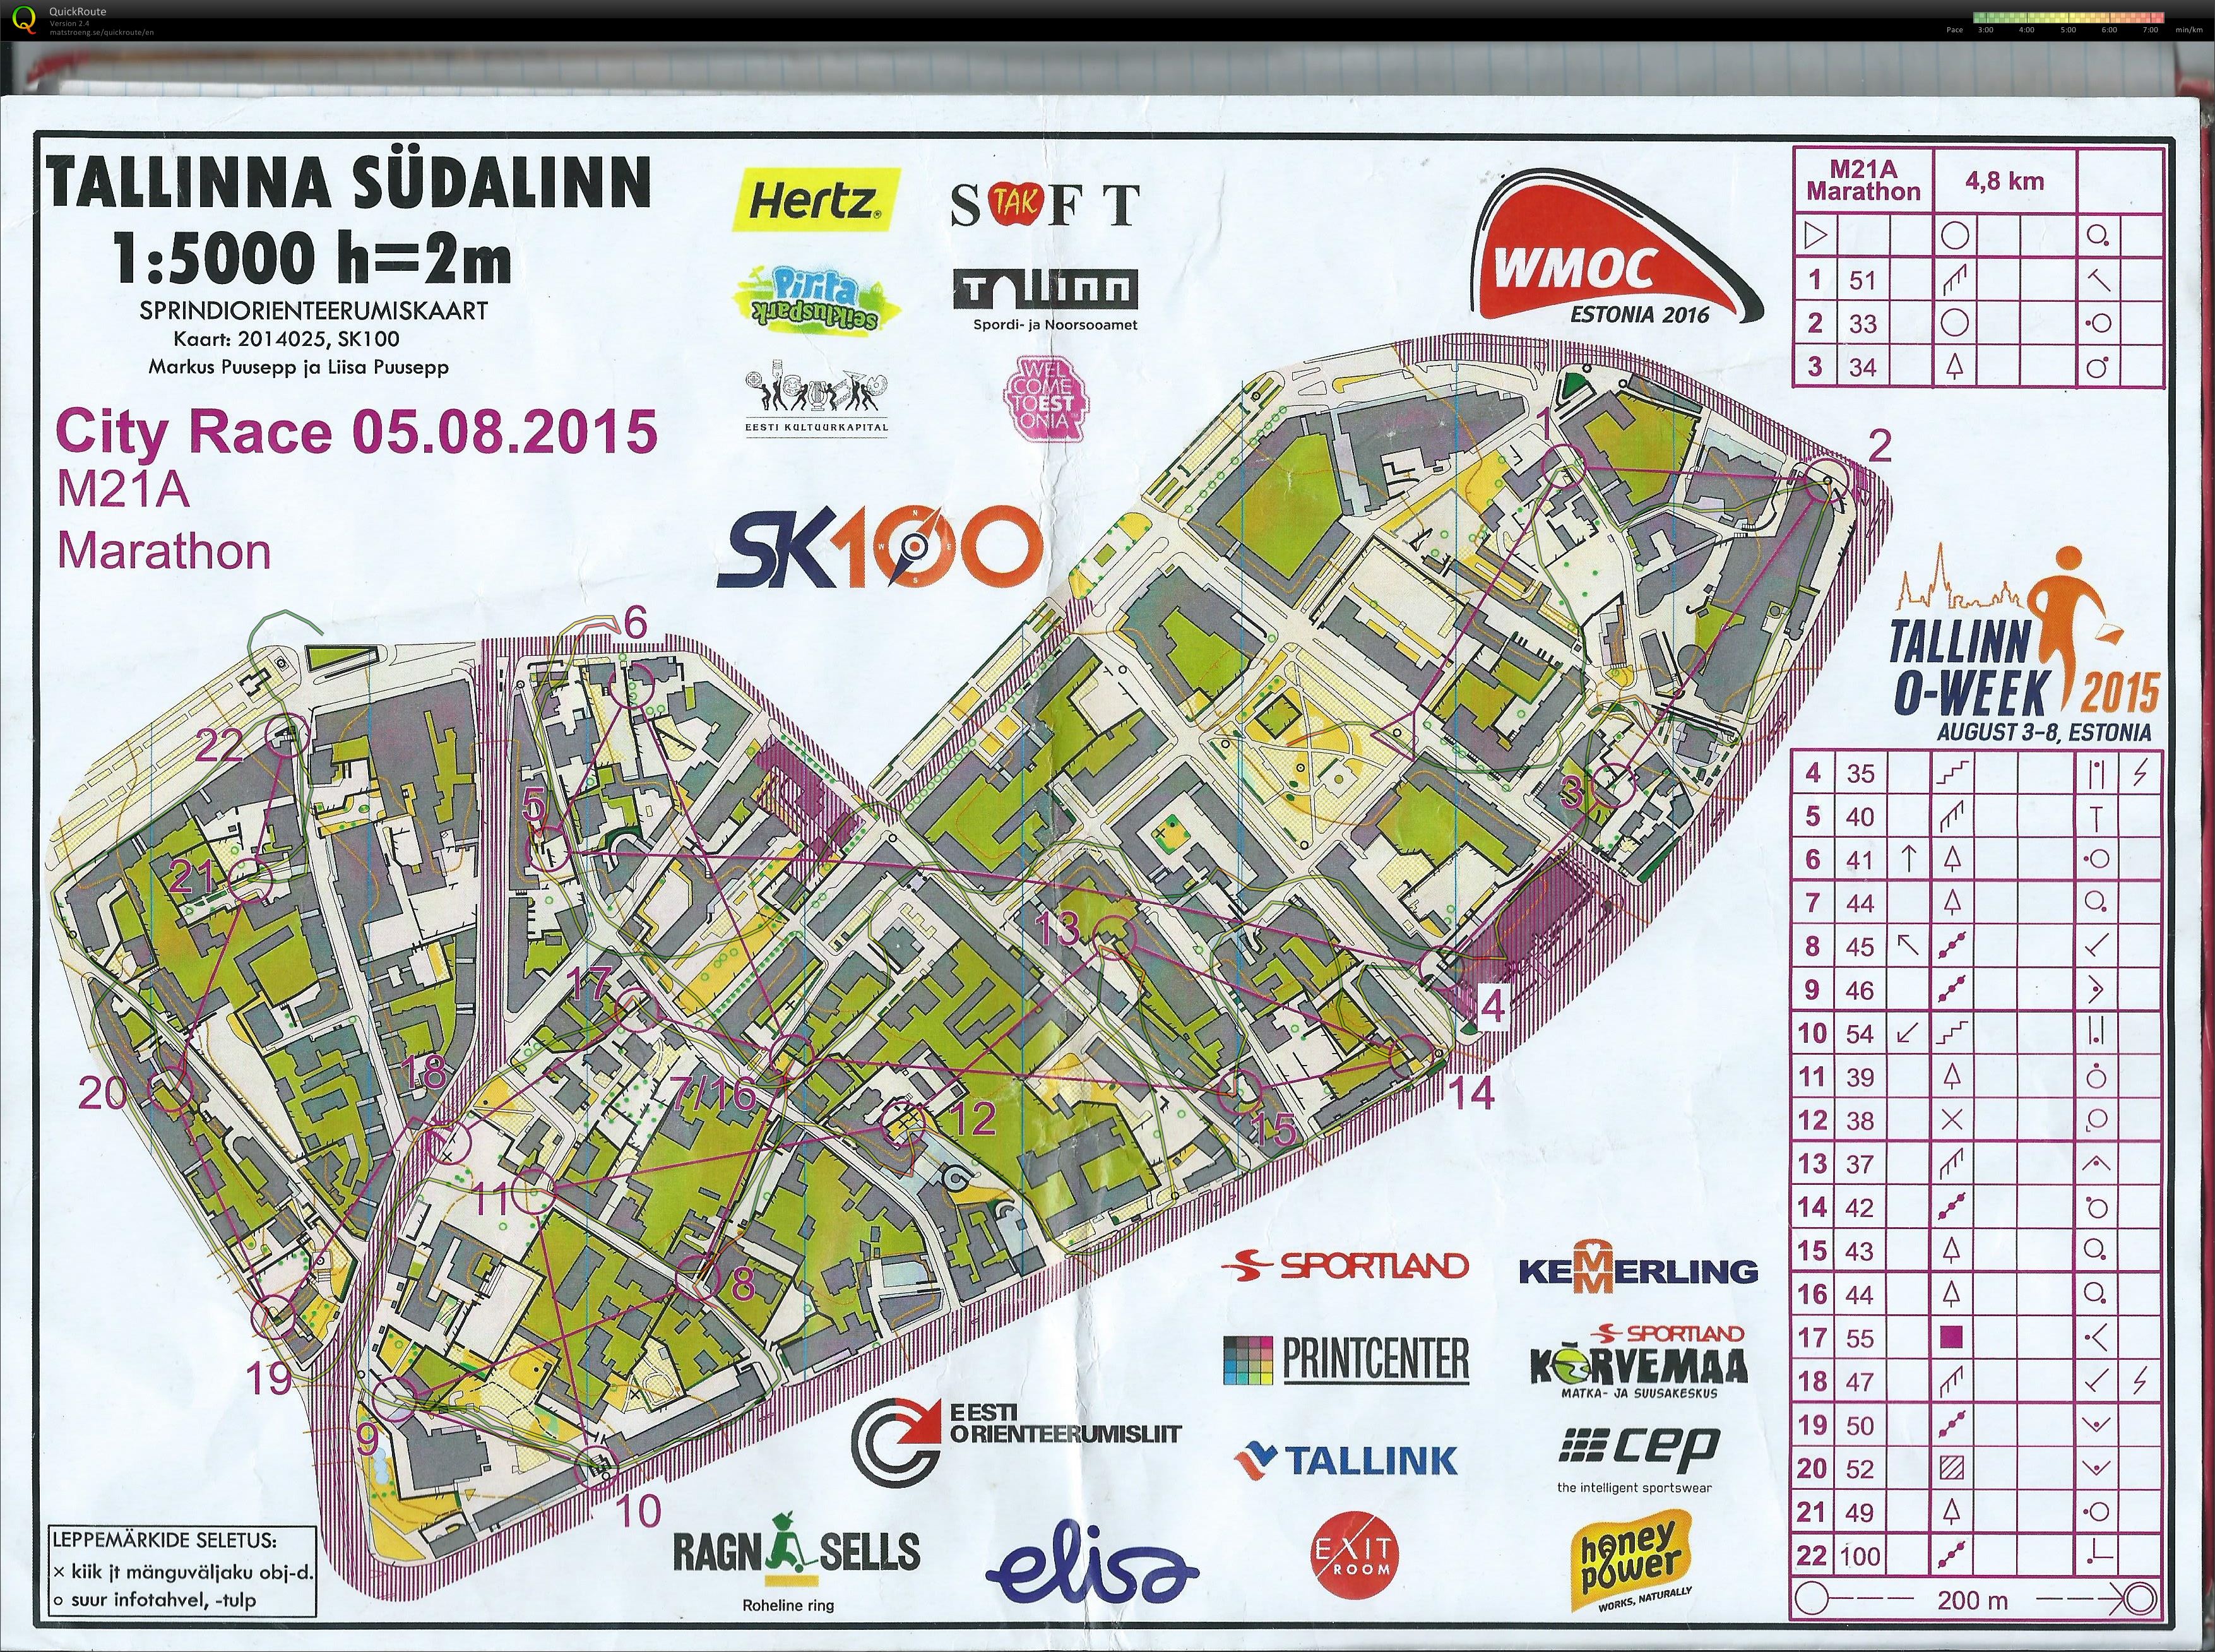 Z378 - Tallinn O-Week - E3 - City Race (05-08-2015)